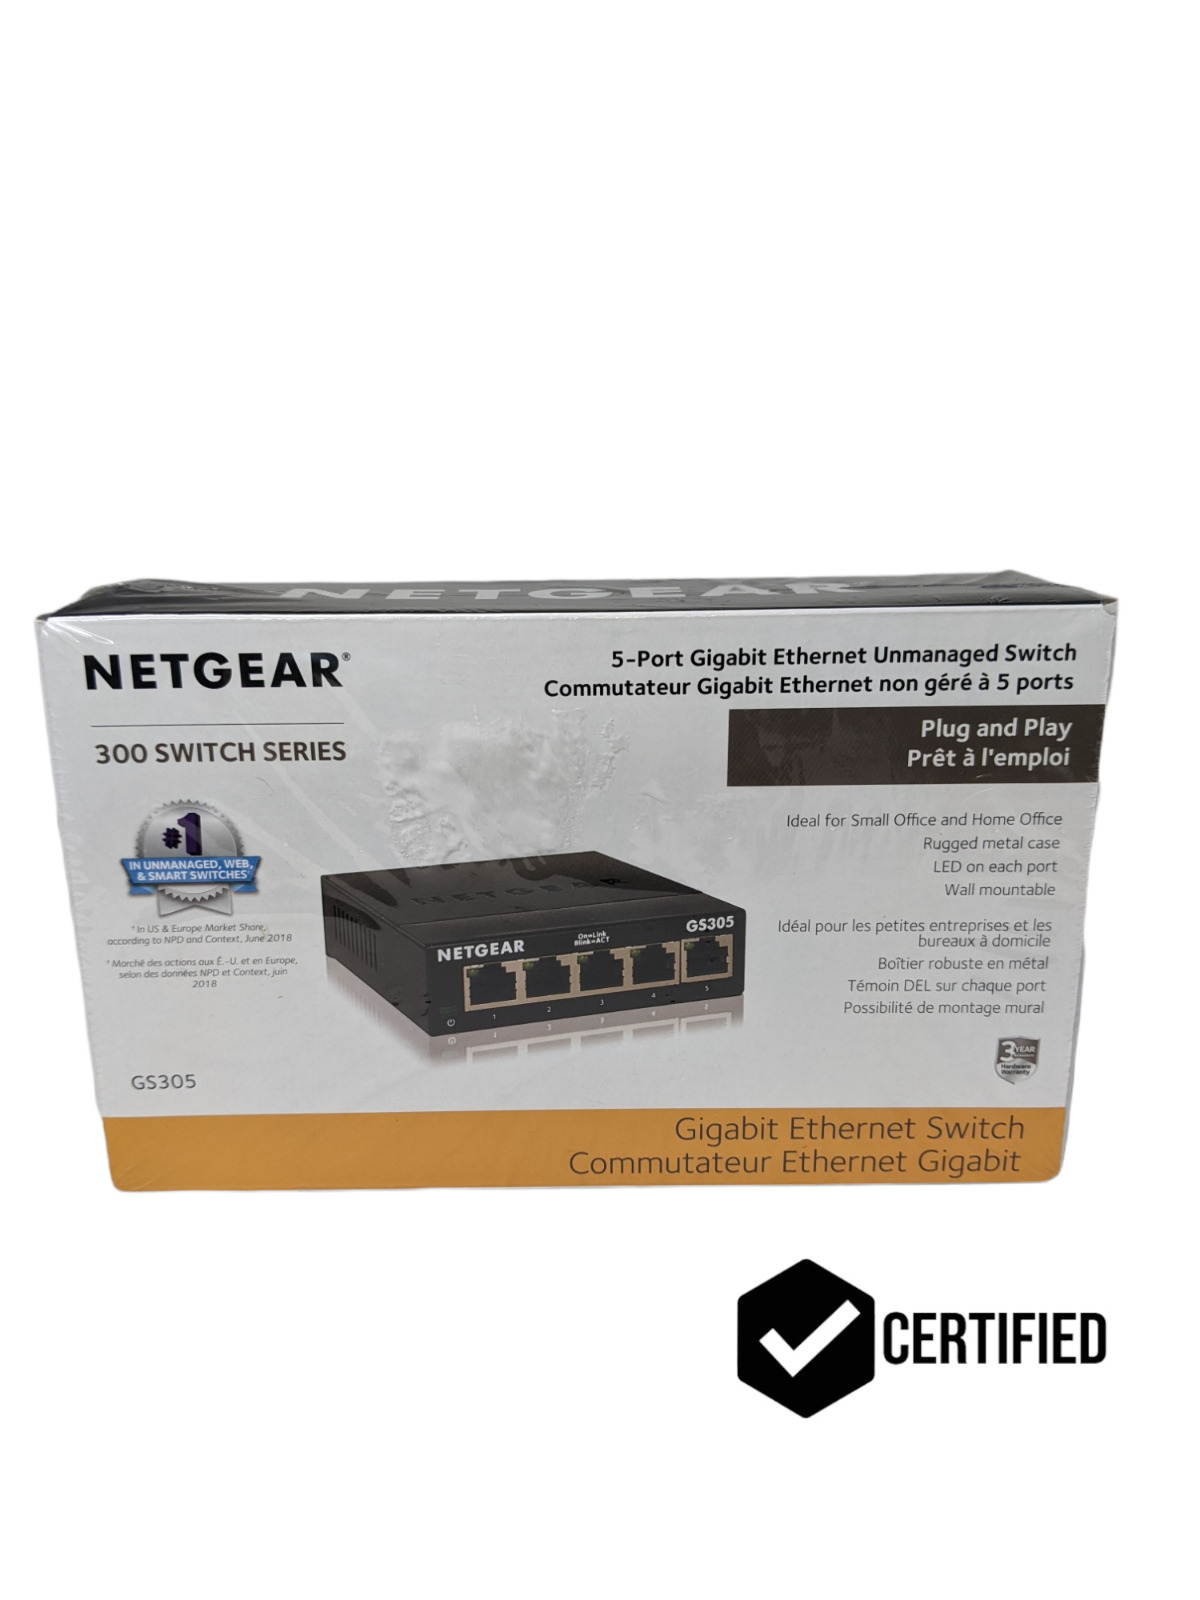 NETGEAR GS305 5-Port Gigabit Ethernet Unmanaged Switch BRAND NEW